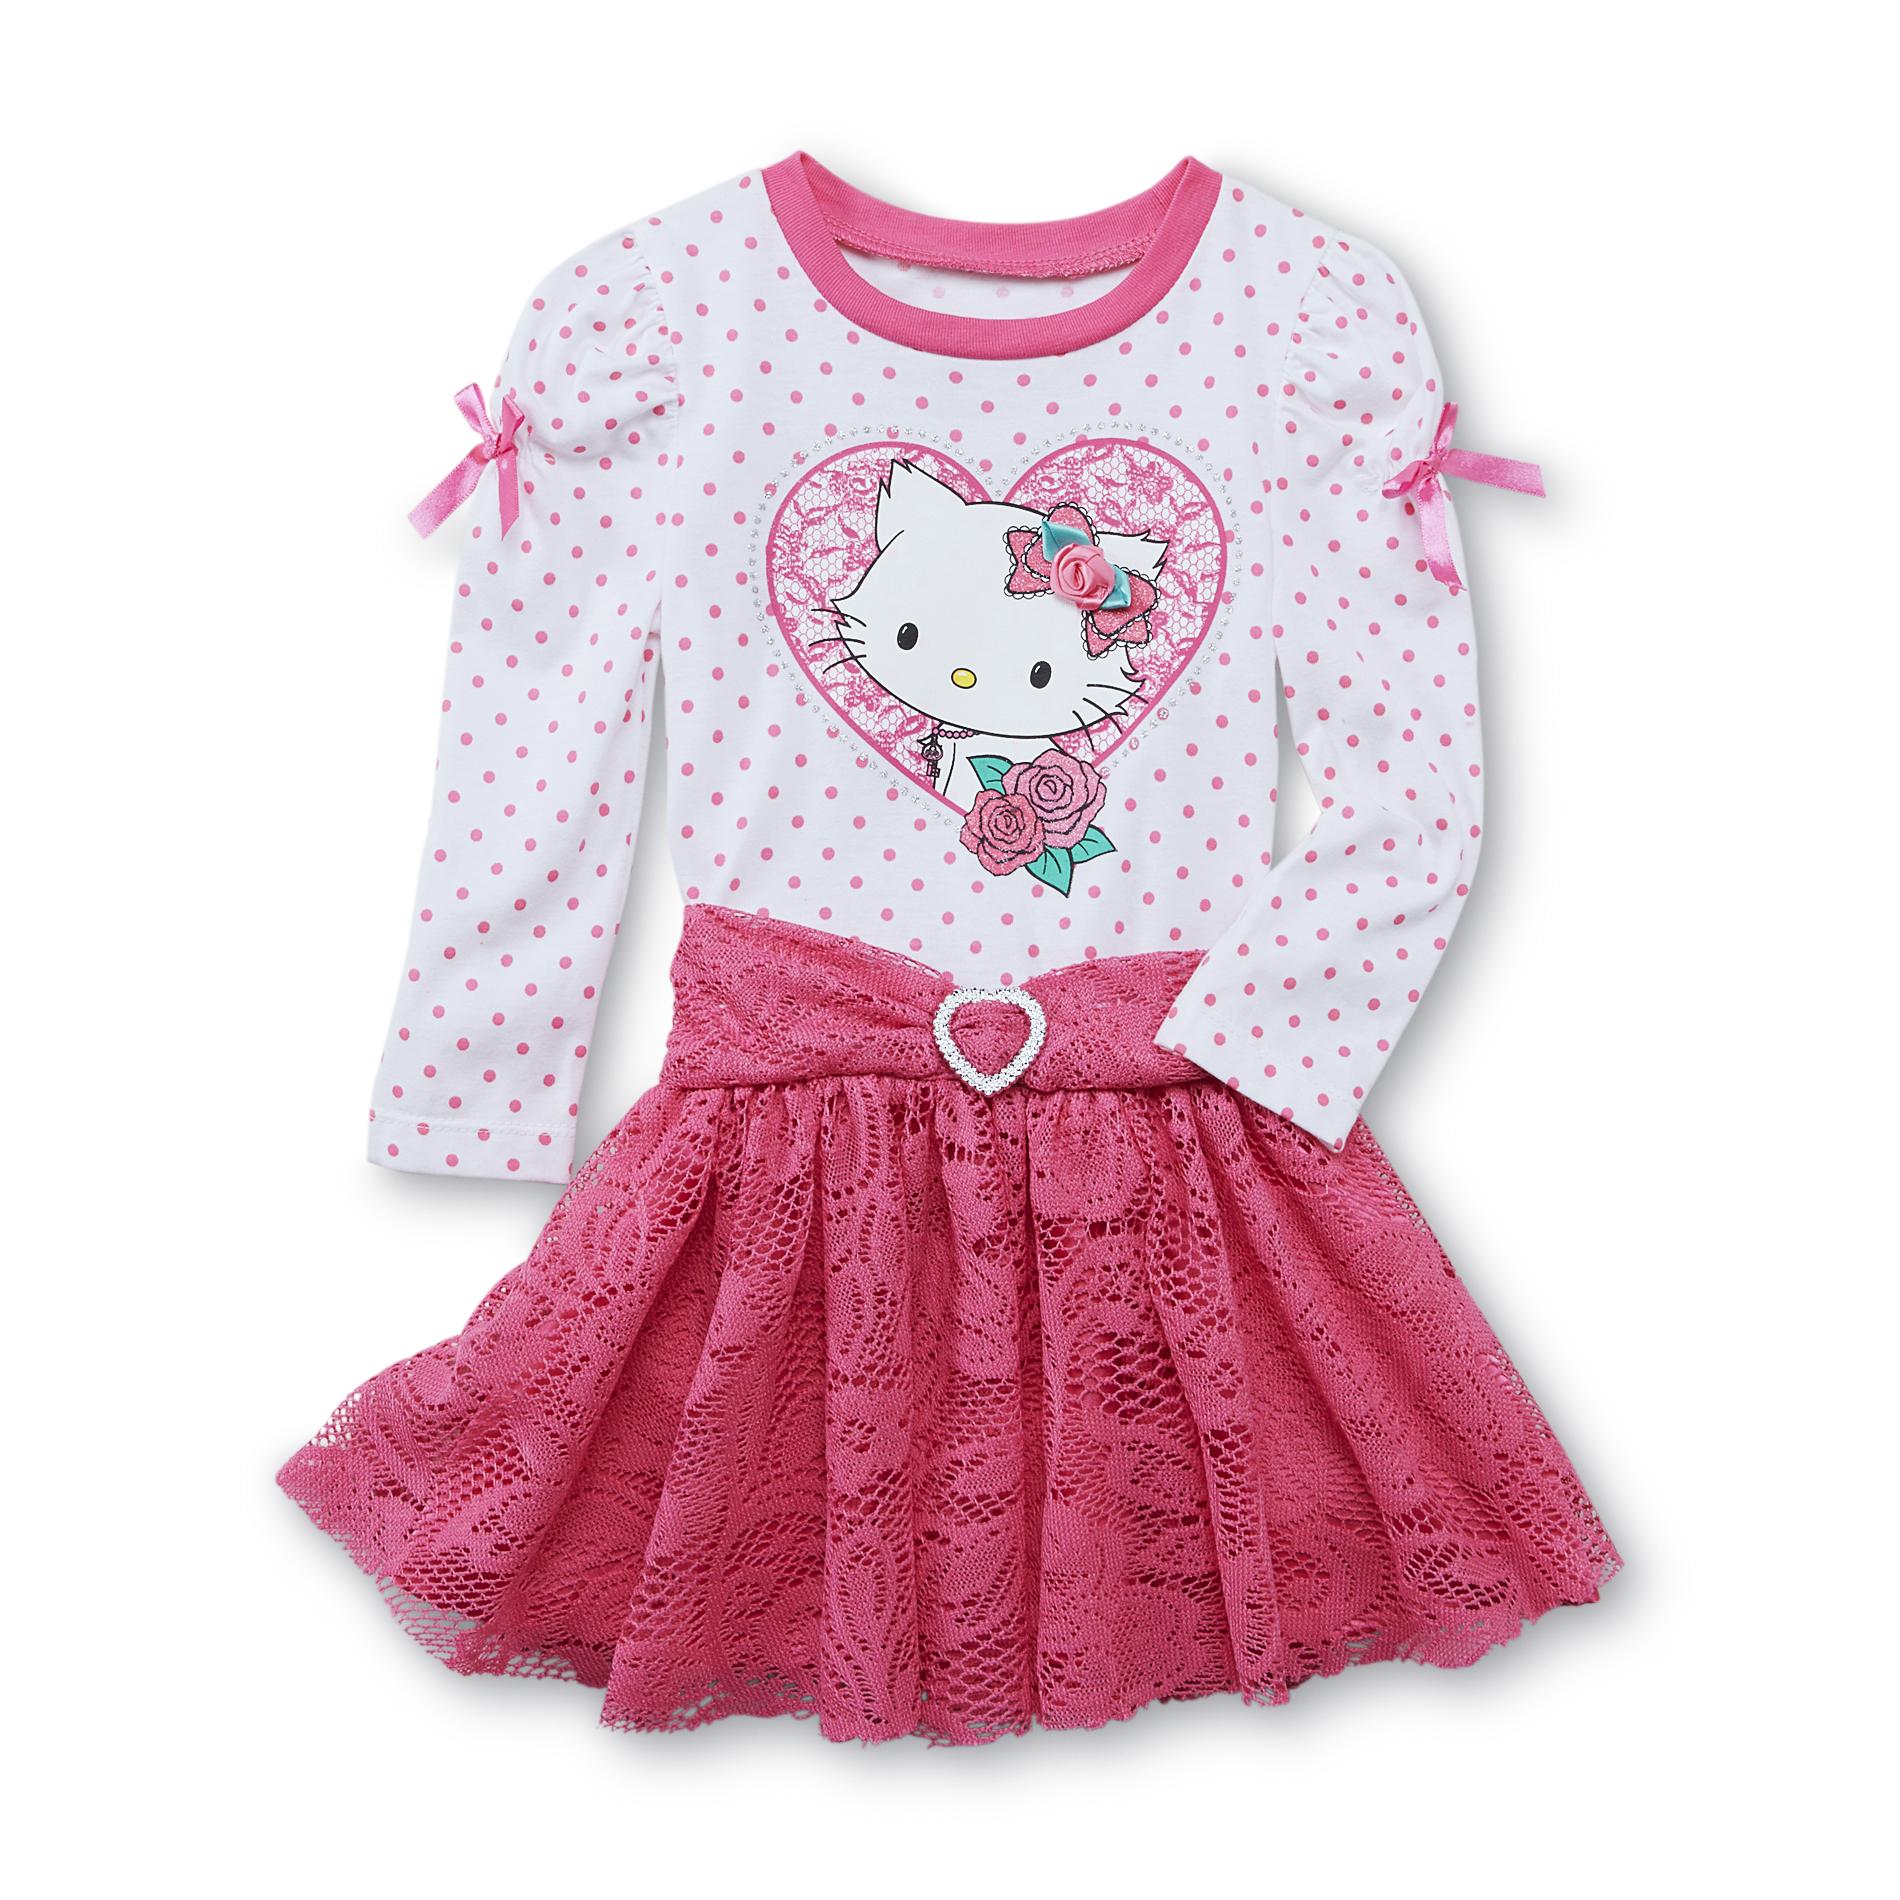 Hello Kitty Baby Infant & Toddler Girl's Embellished Dress - Polka Dot